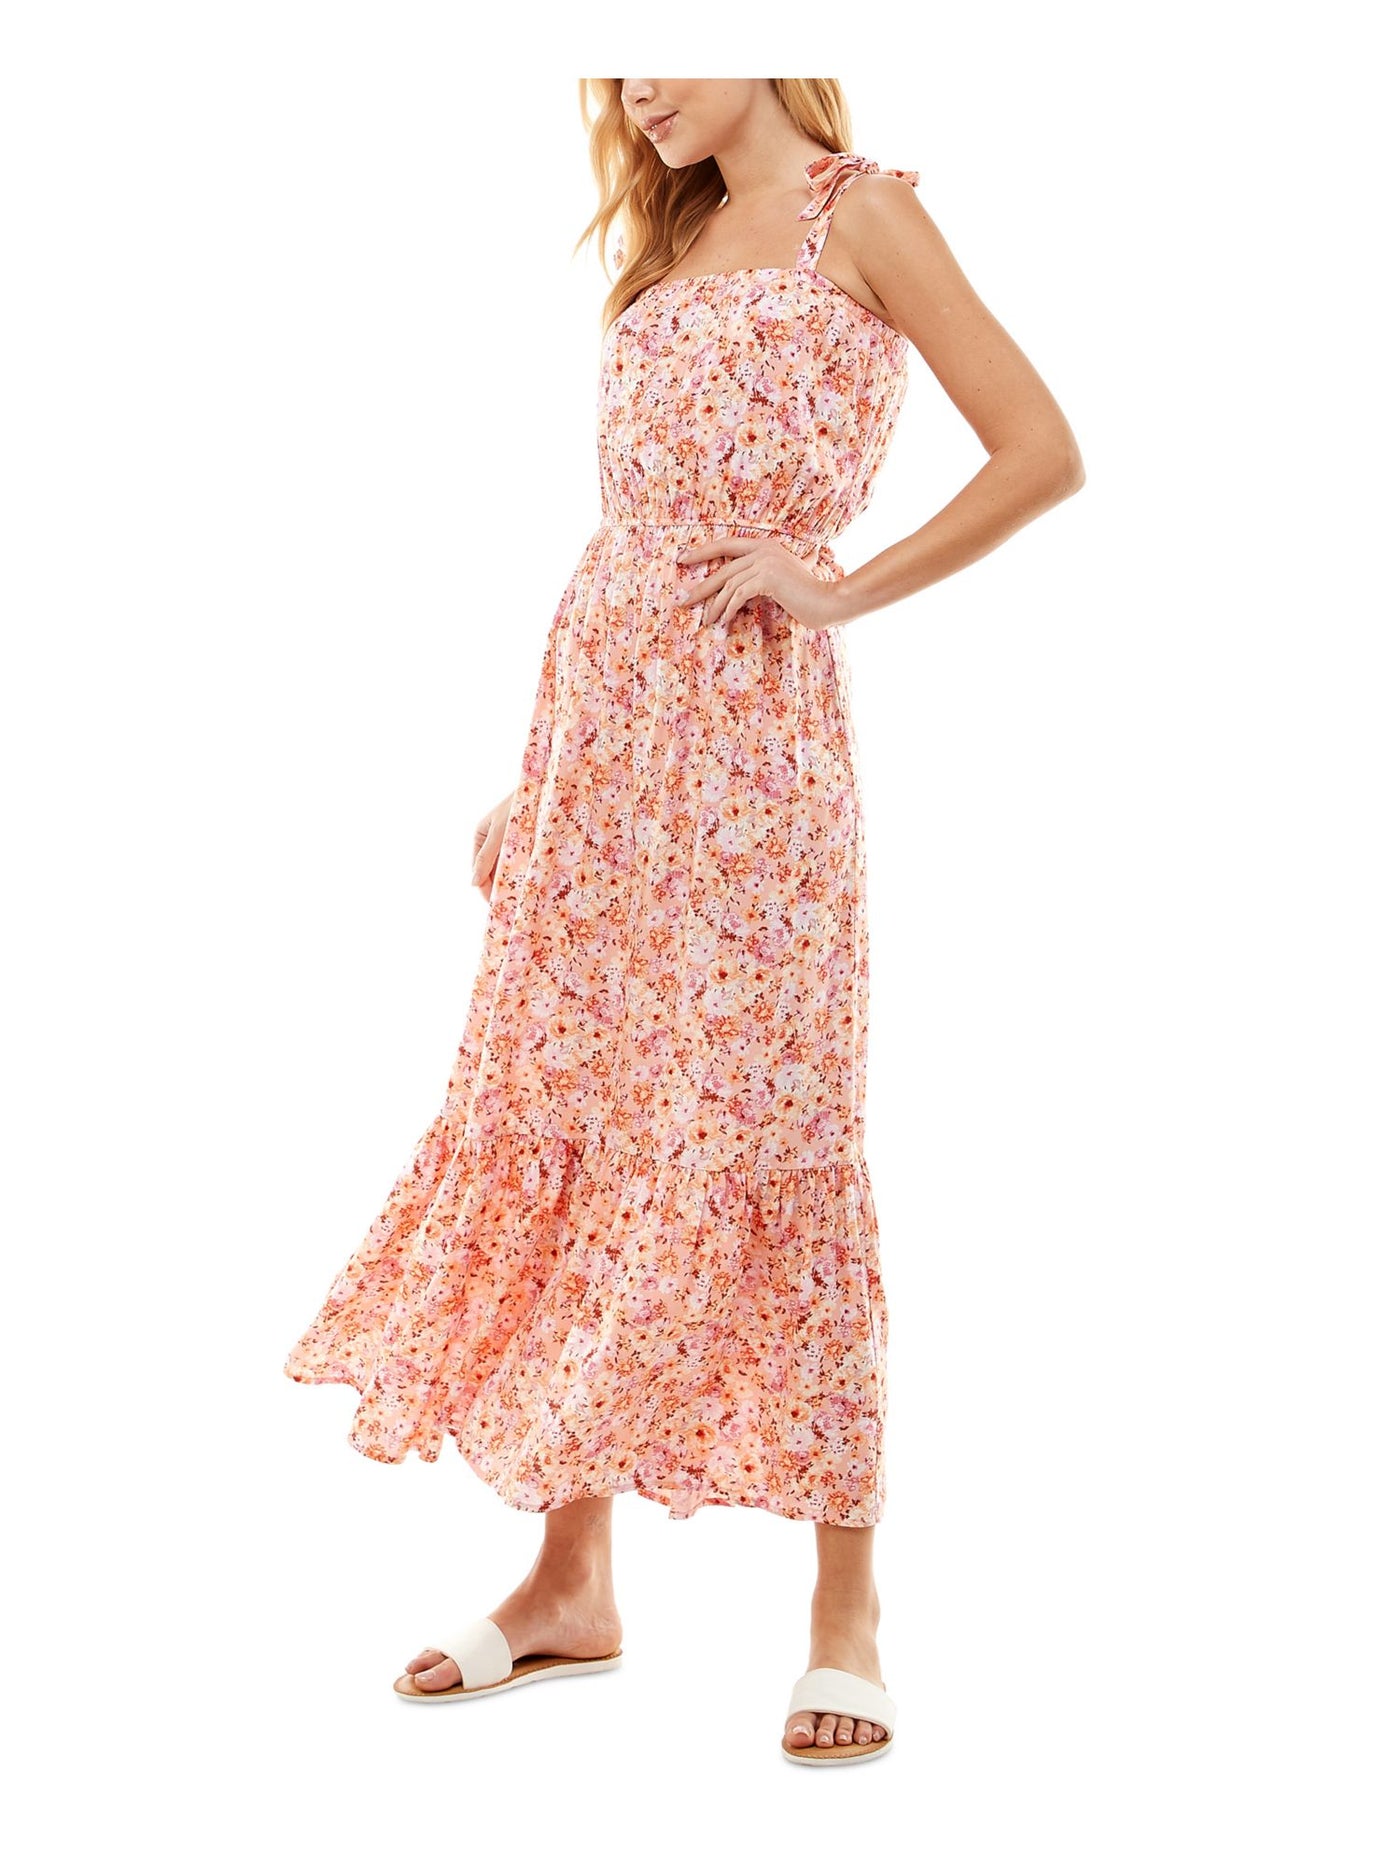 KINGSTON GREY Womens Orange Tie Floral Sleeveless Square Neck Maxi Fit + Flare Dress Juniors S